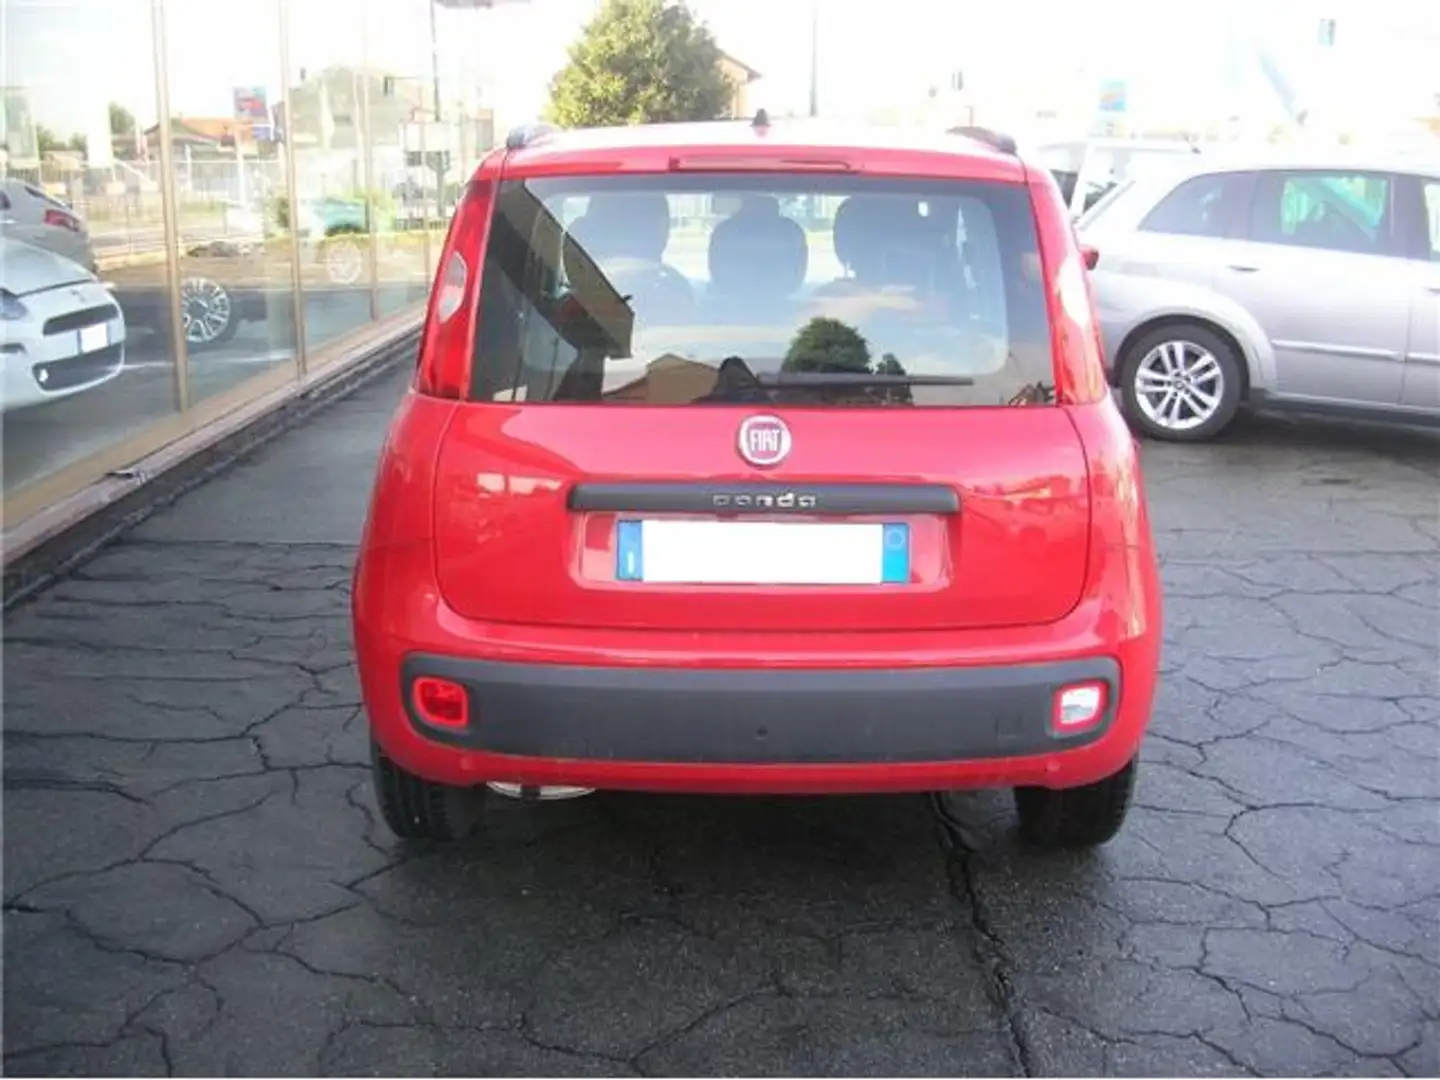 usato Fiat Panda Berlina a Torino - To per € 10.600,-